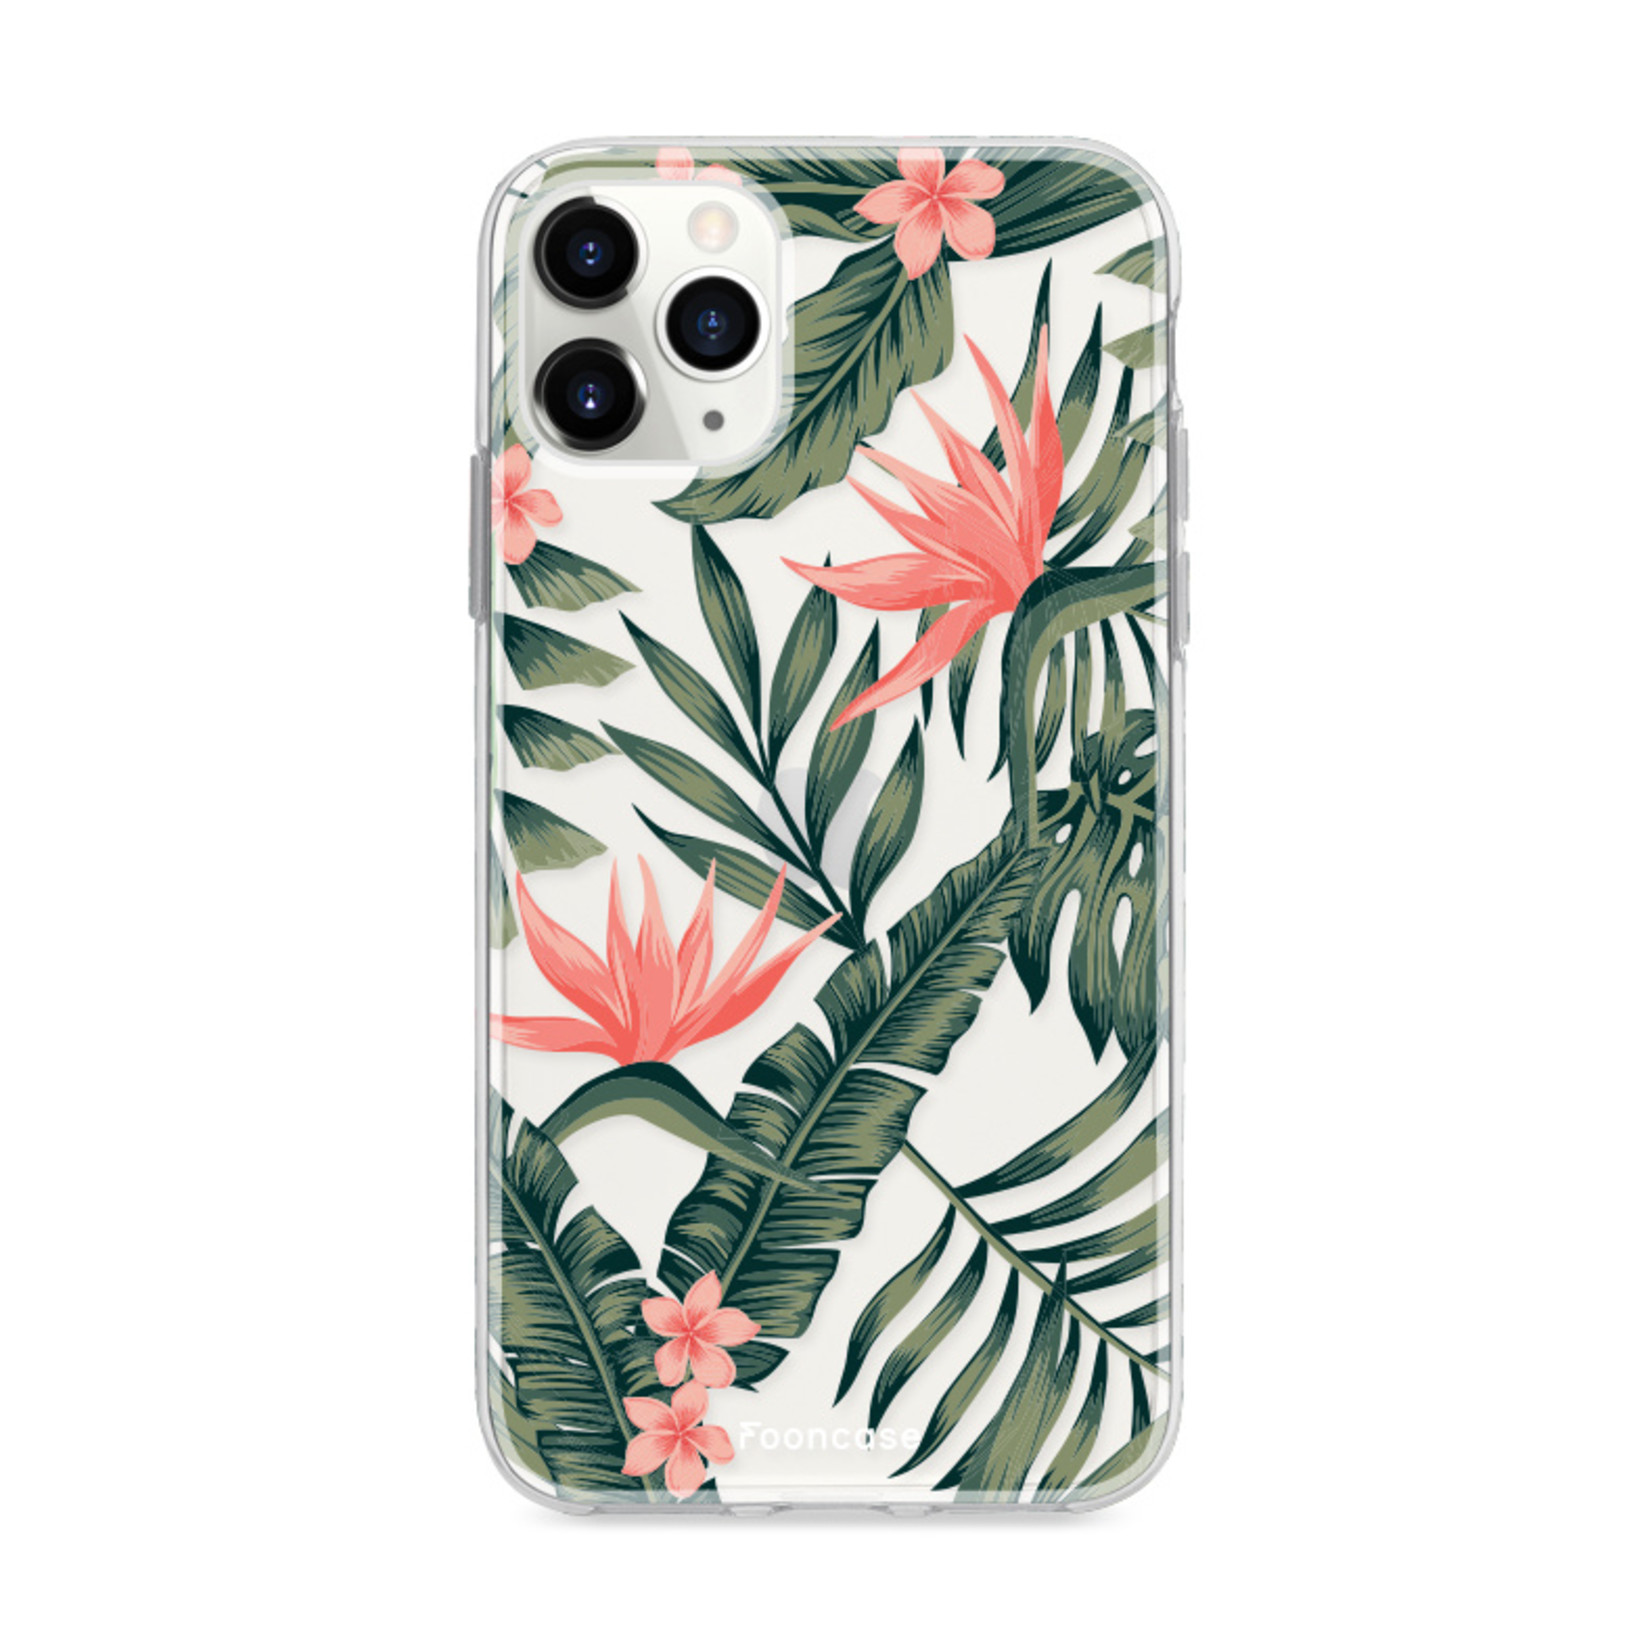 FOONCASE IPhone 12 Pro Max Phone Case - Tropical Desire